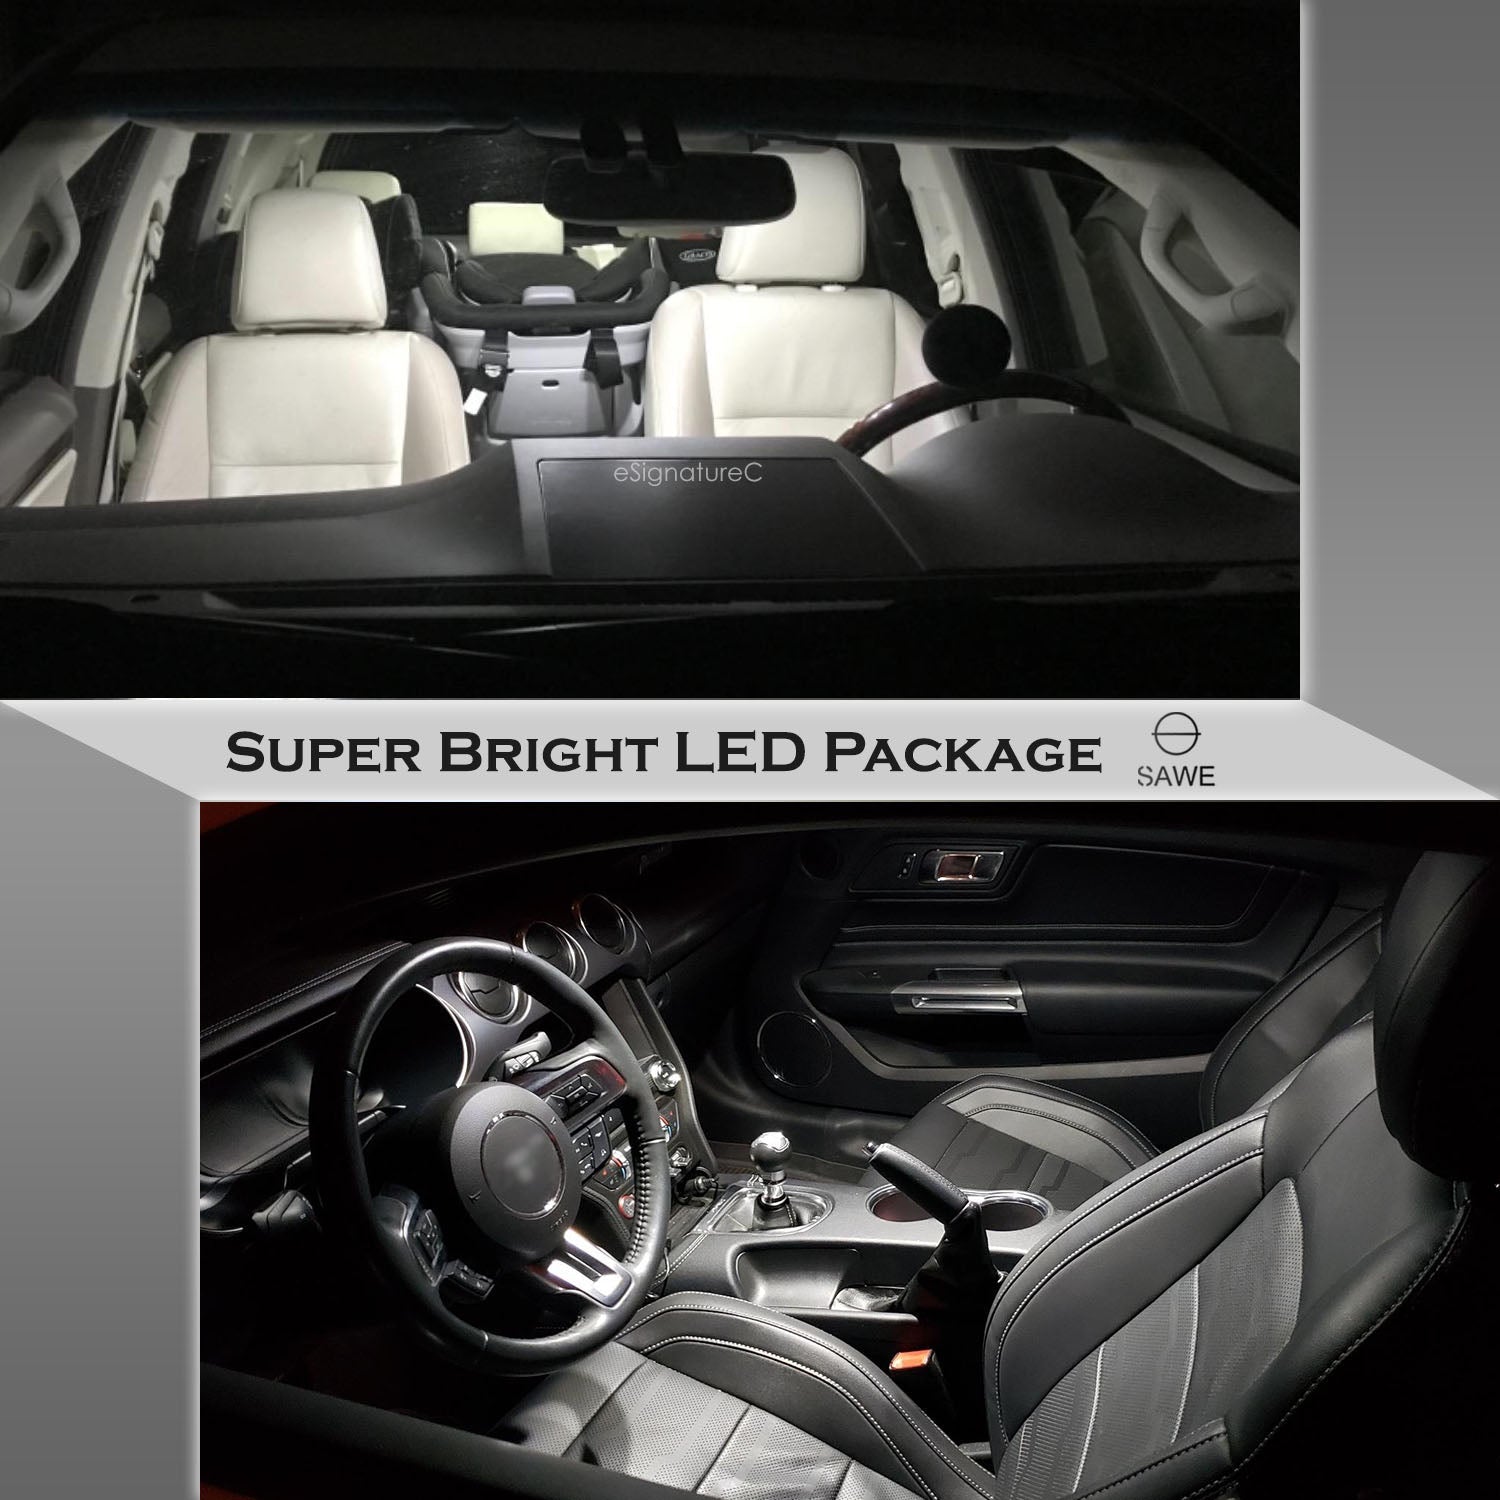 For Dodge Grand Caravan Interior LED Lights - Dome & Map Lights Package Kit for 2008 - 2020 - White